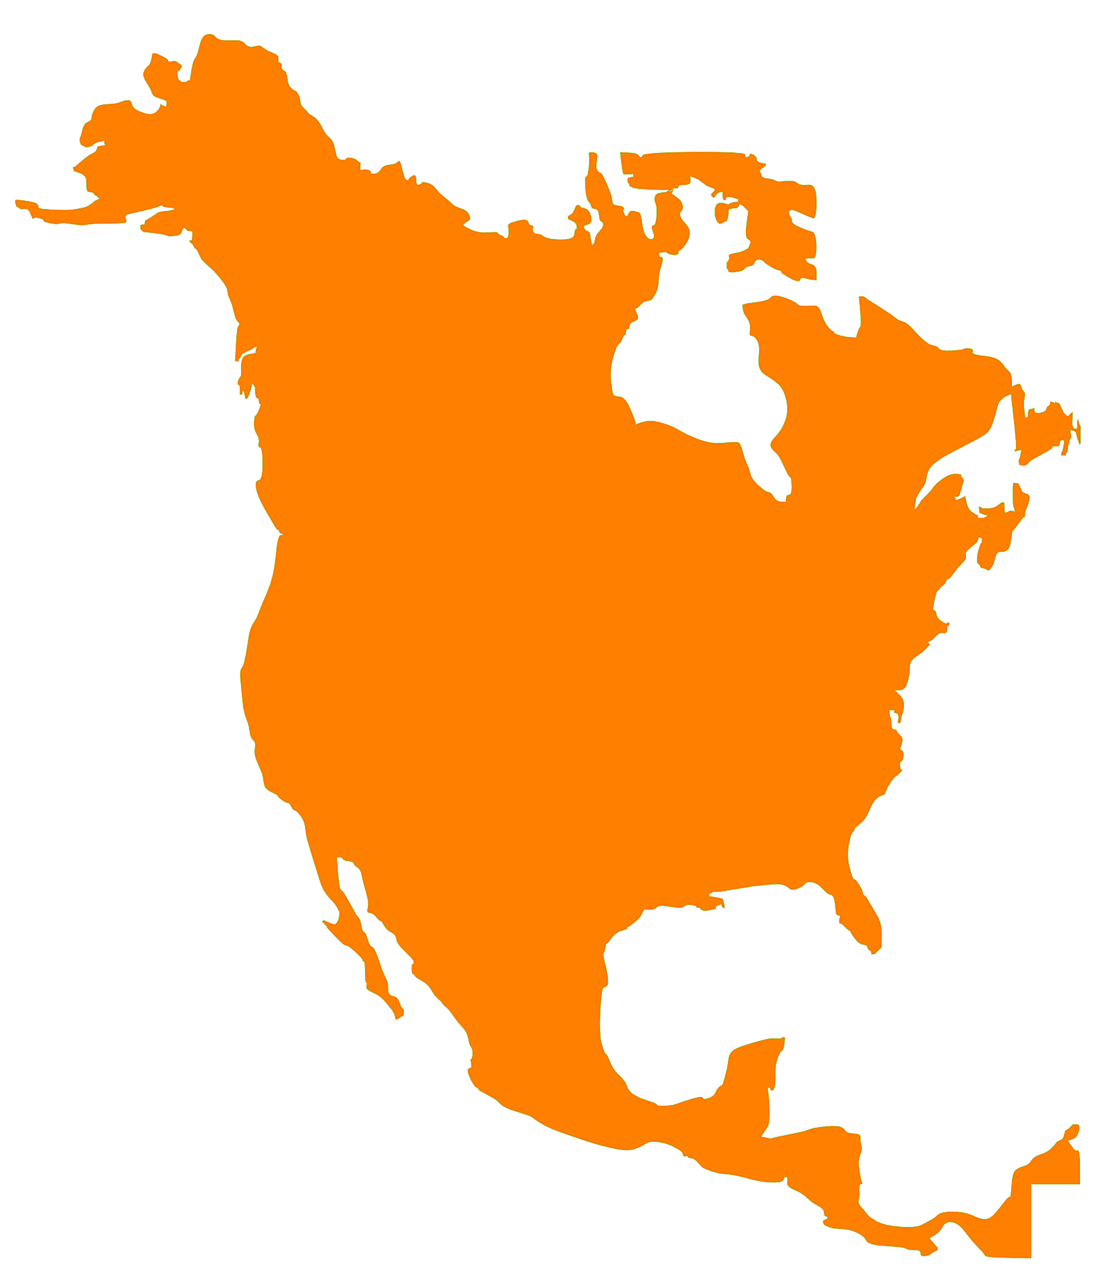 Северная америка рисунок материка. Северная Америка материк. Континент Северная Америка. Контур материка Северная Америка. Геоконтур Северной Америки.